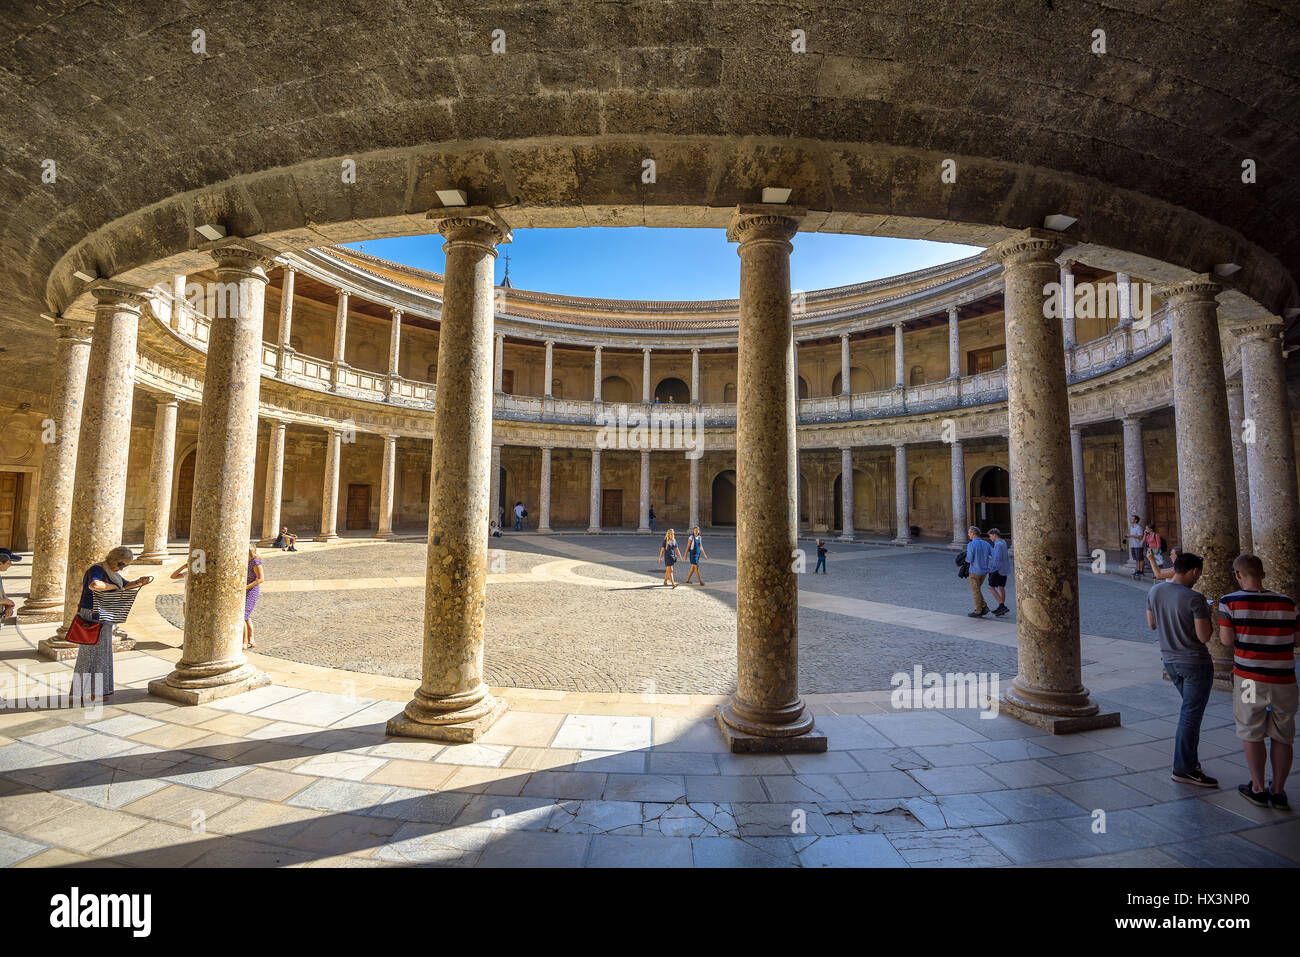 Atrium with columns of Alhambra palace Charles V {Palacio de Carlos V) in La Alhambra. Granada, Spain Stock Photo